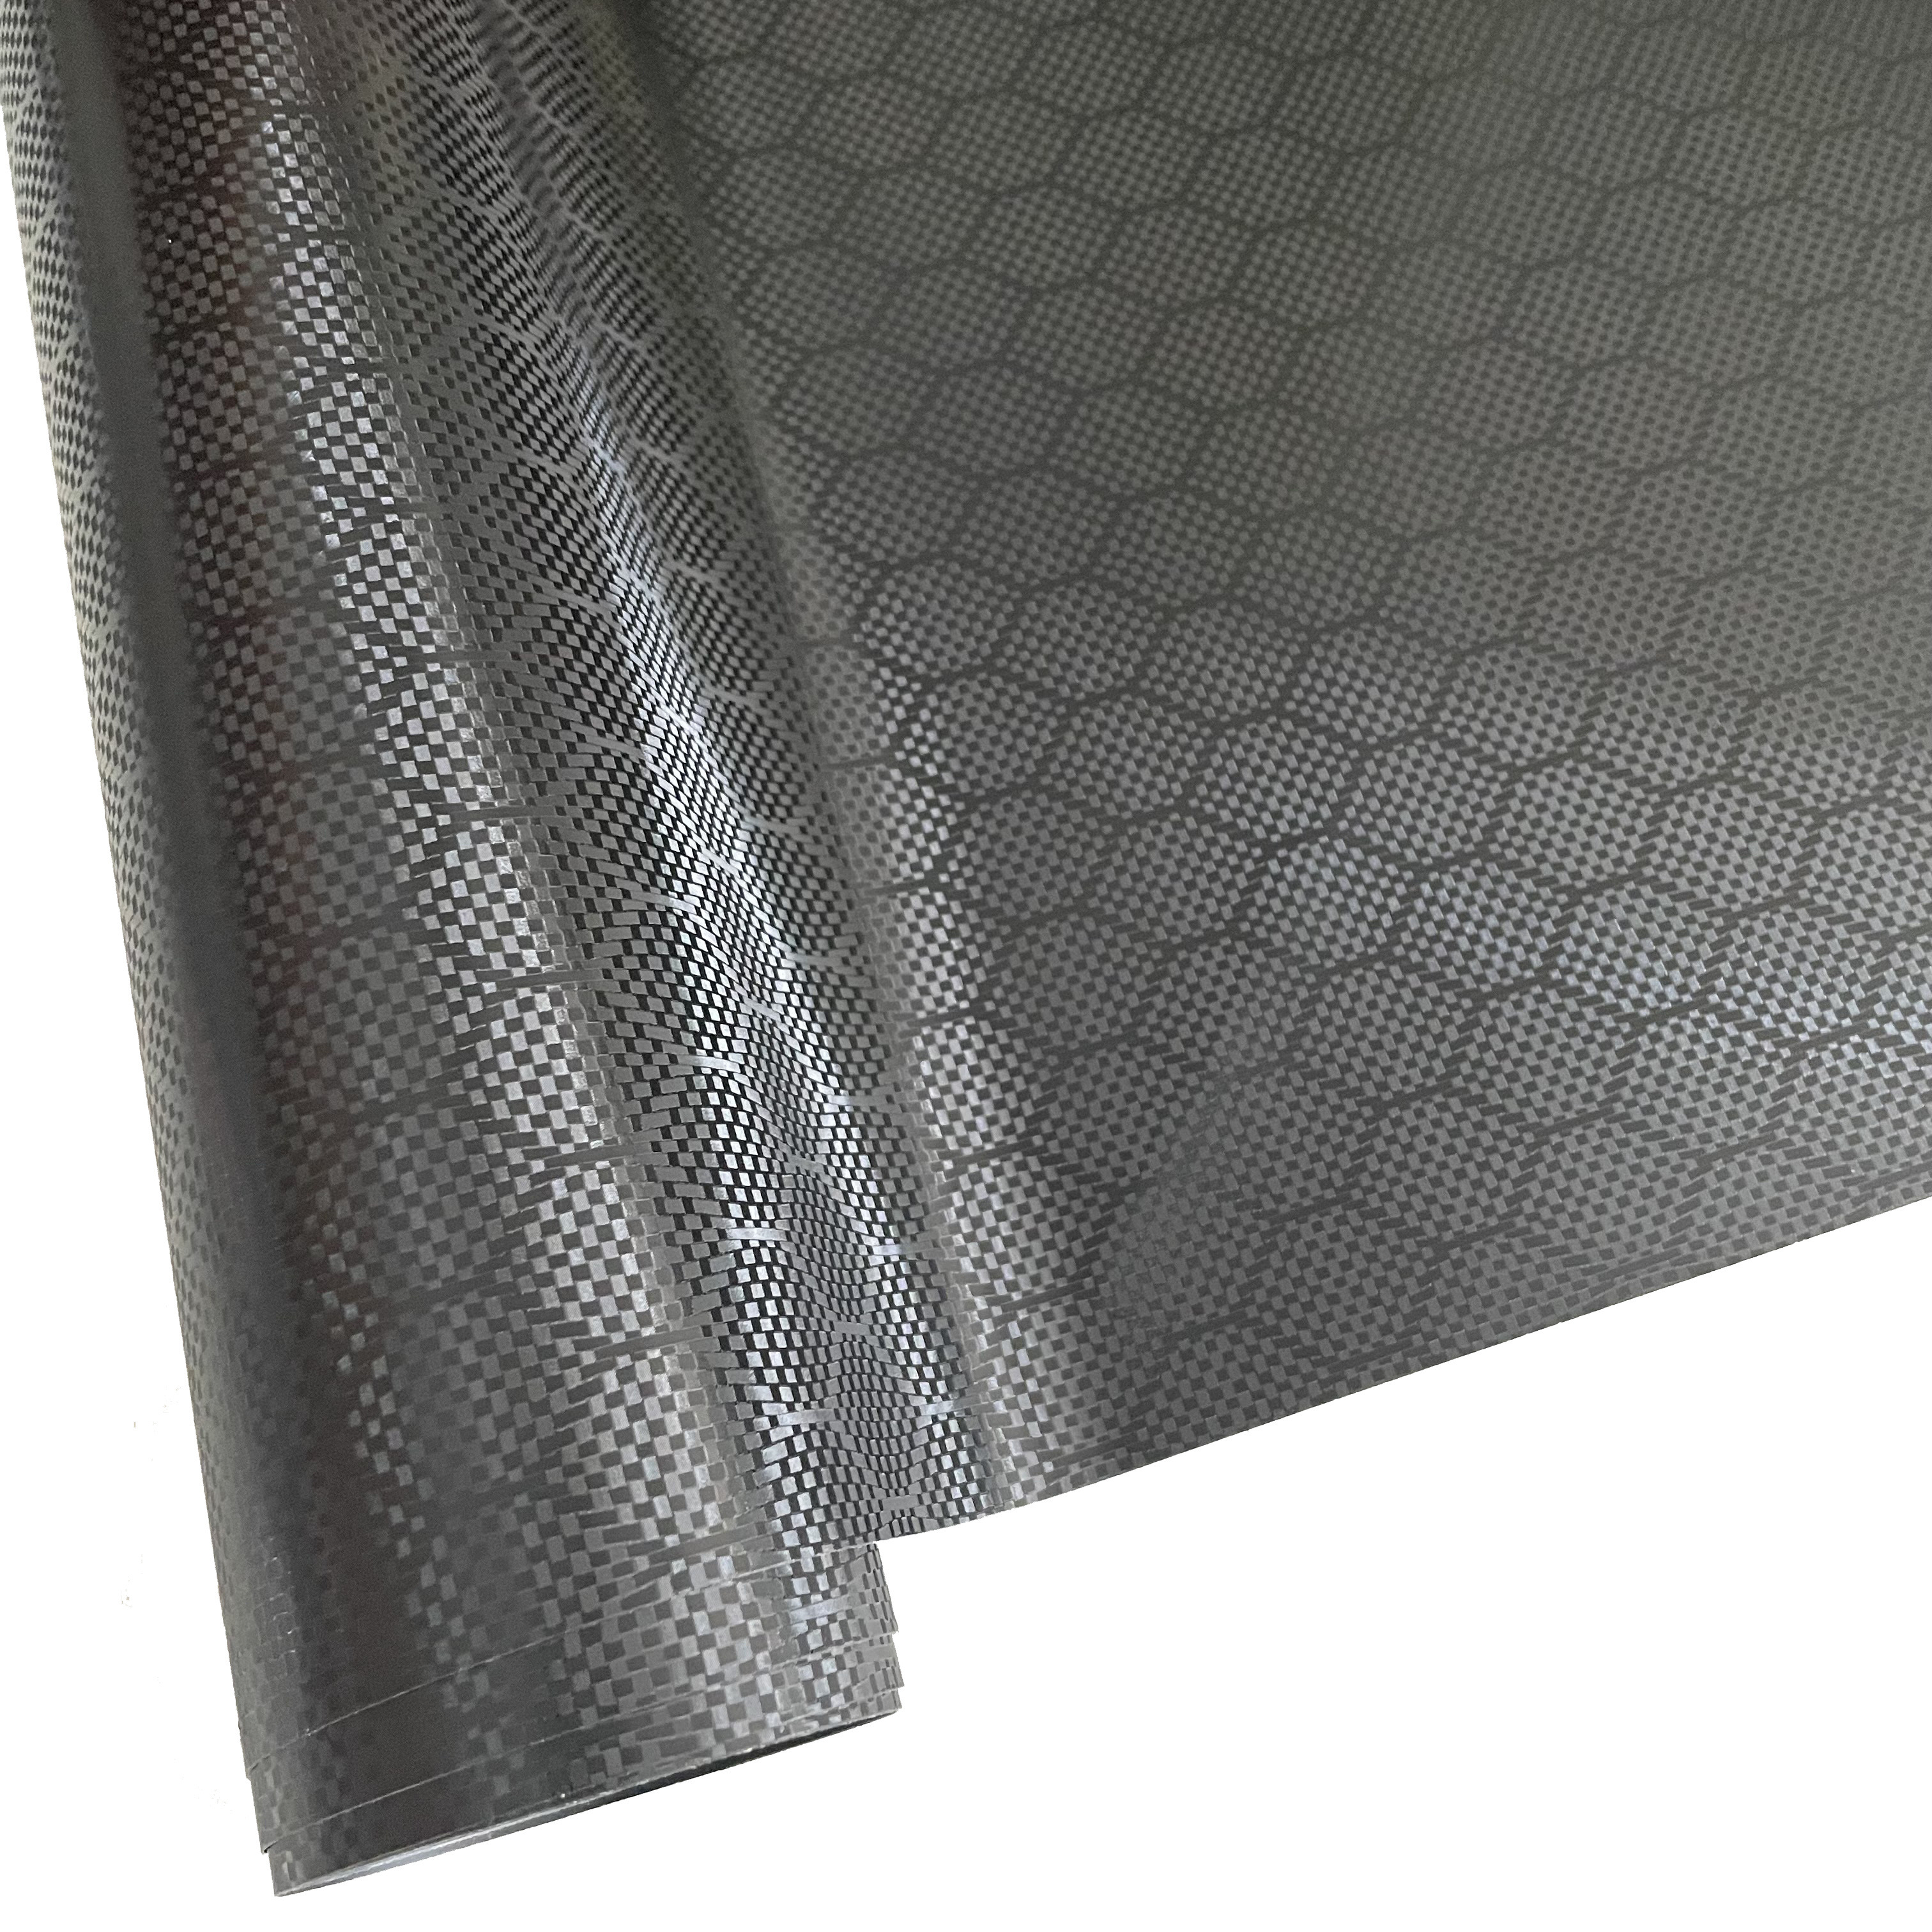 StickersLab - Folie Wrapping Carbon 5D weiß extra glänzend 50 x 200 cm +  Spachtel 3M + Cuttermesser